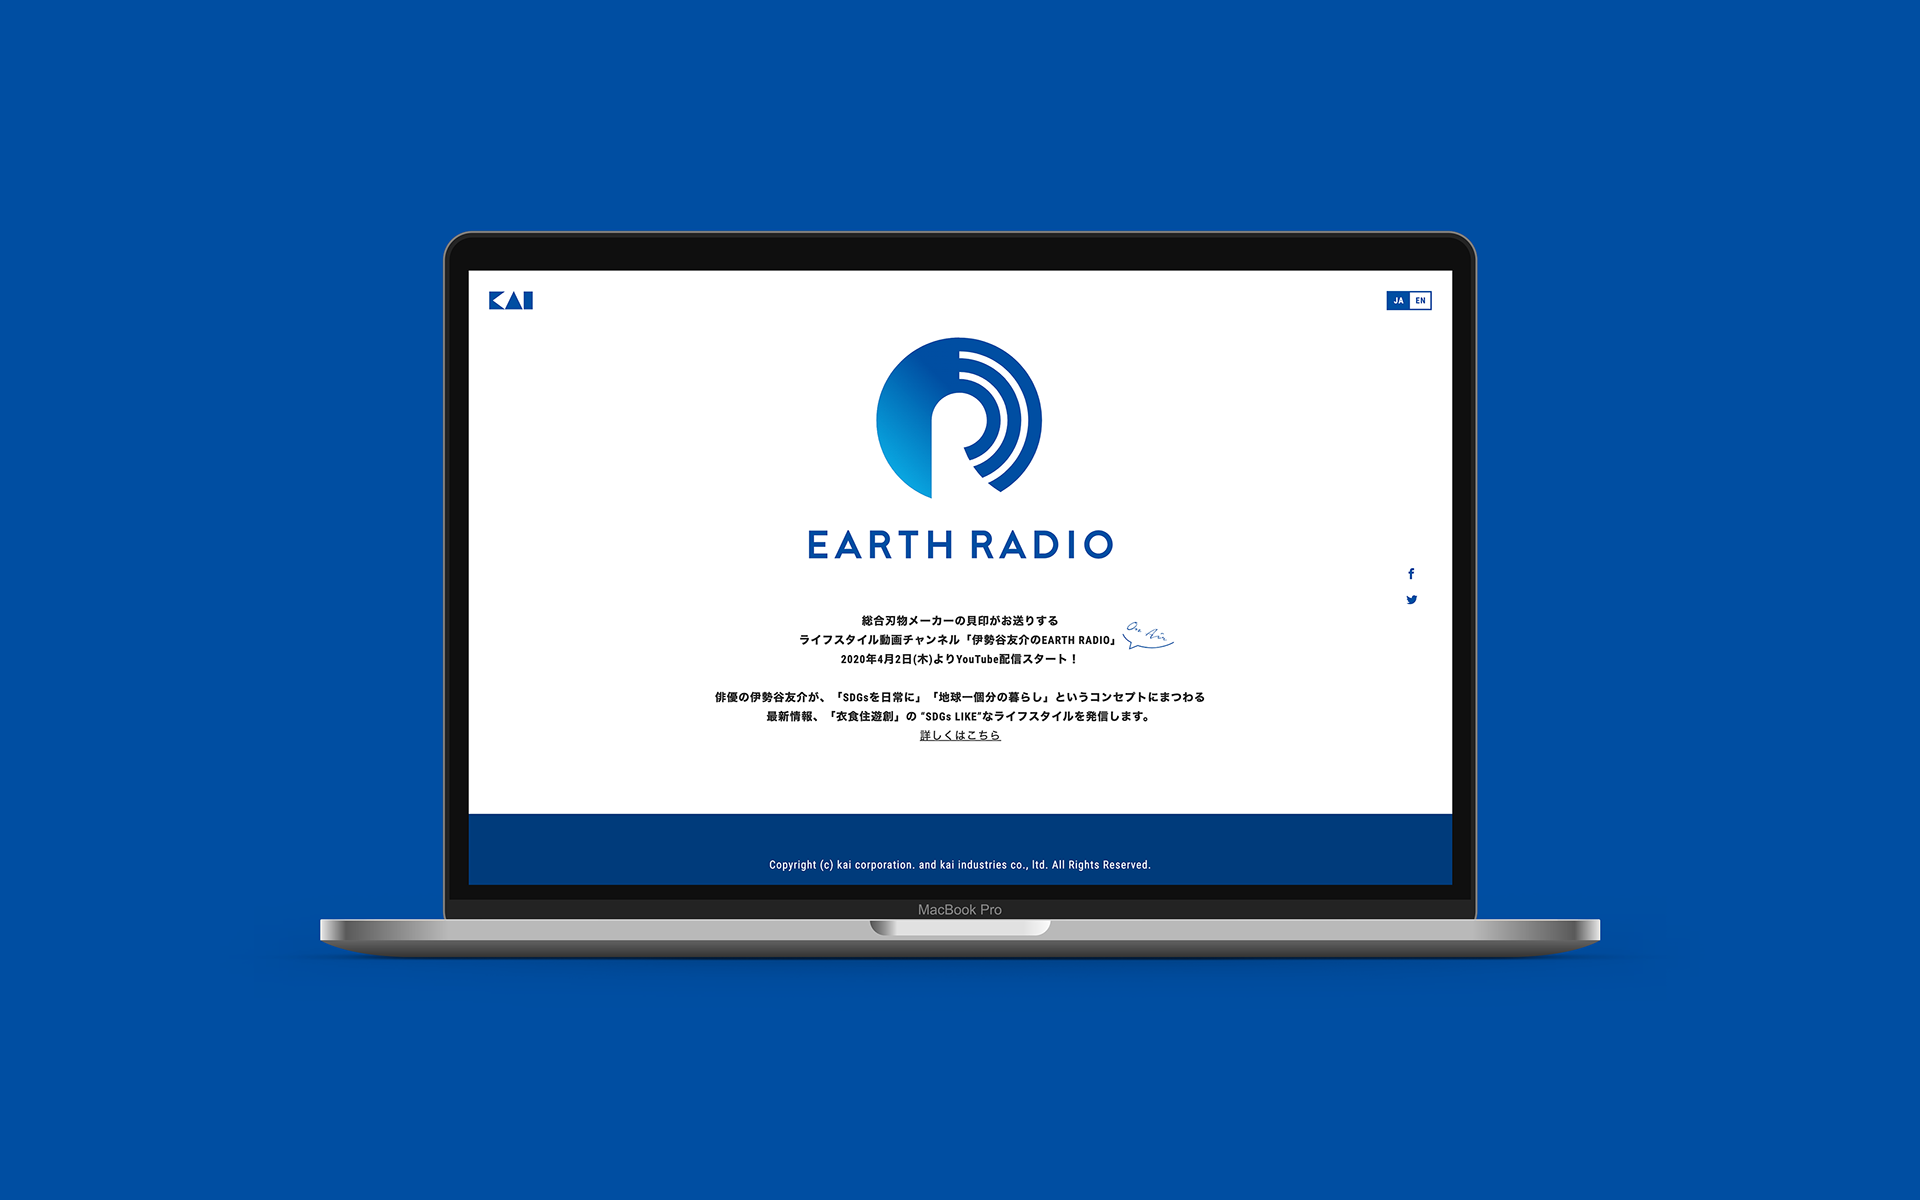 EARTH RADIO刀具品牌设计